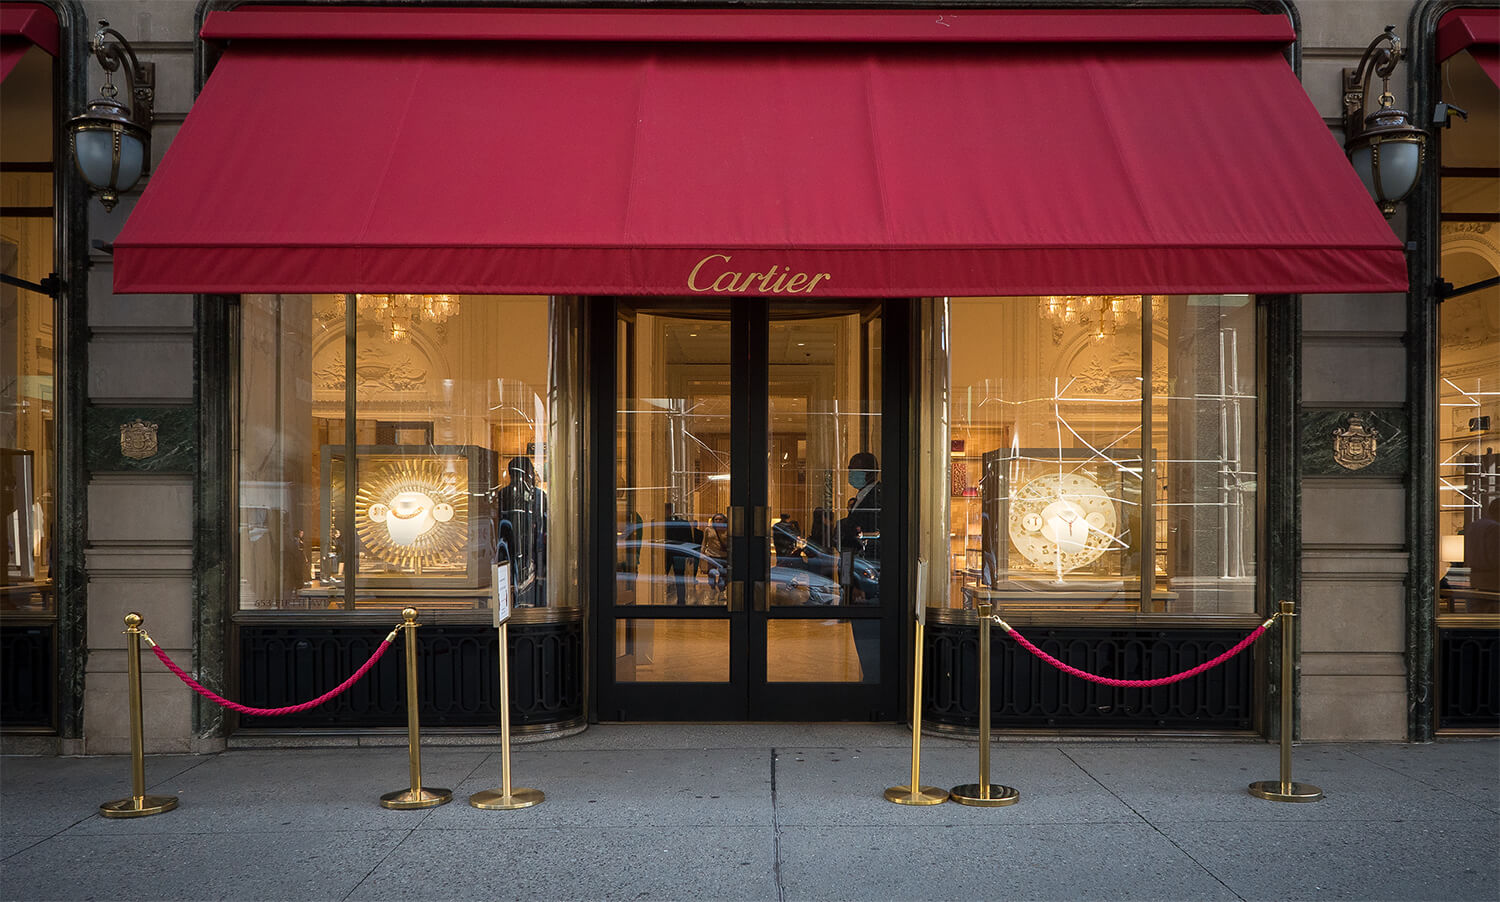 Case Study: Cartier Flagship Store Refurbishment - Ramtech